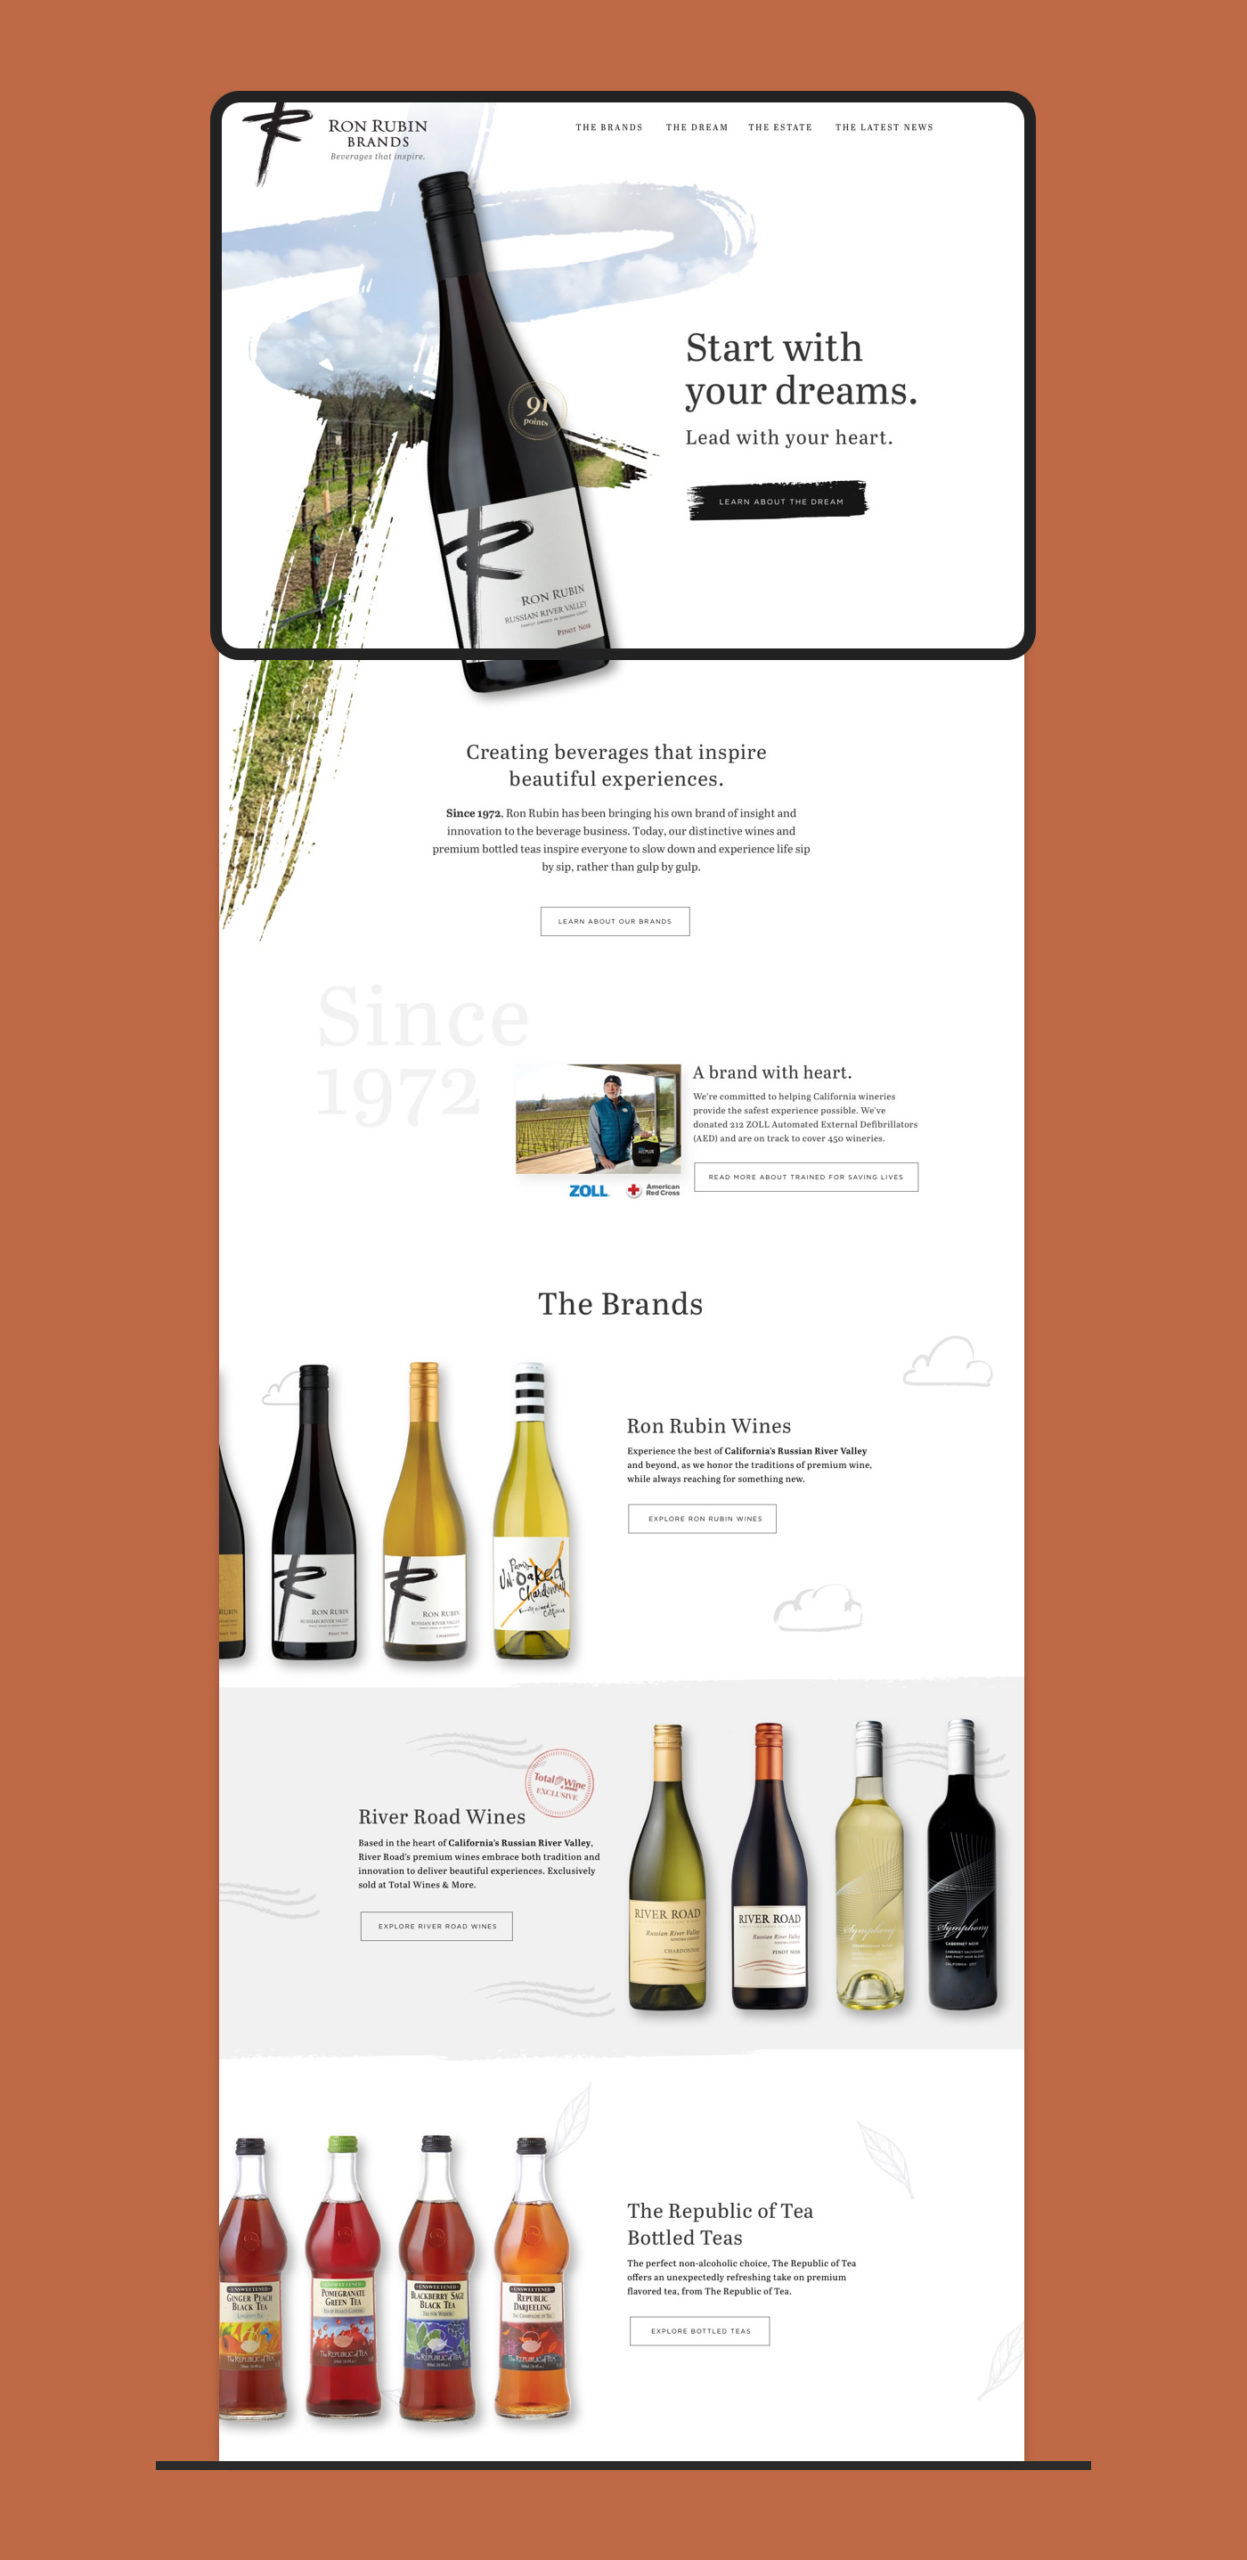 The homepage of Ron Rubin's website design